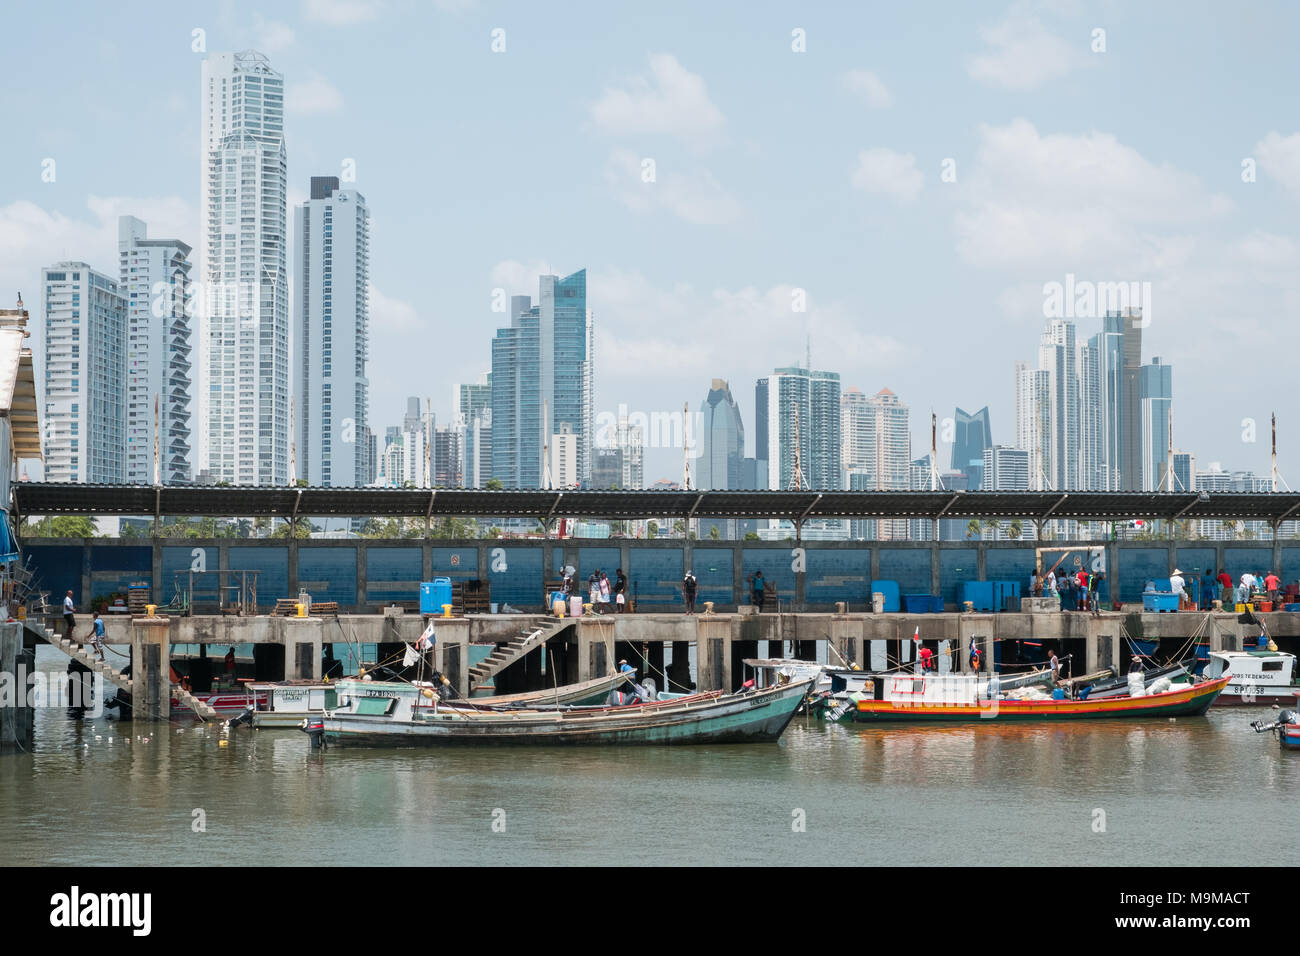 Panama City, Panama - march 2018: Fishermen and boats on fish market / harbour with city skyline, Panama City. Stock Photo